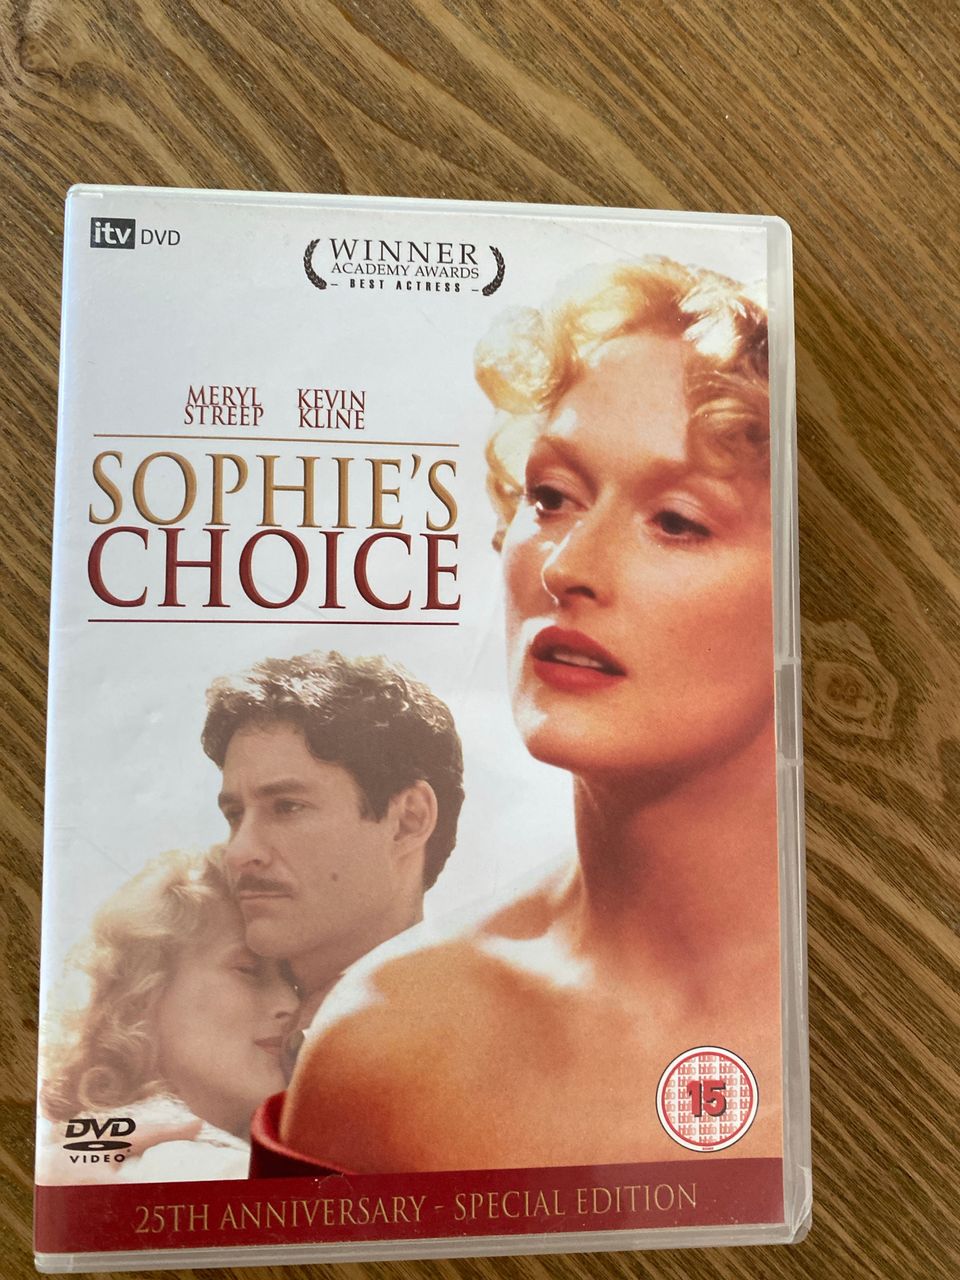 Sophie s choice